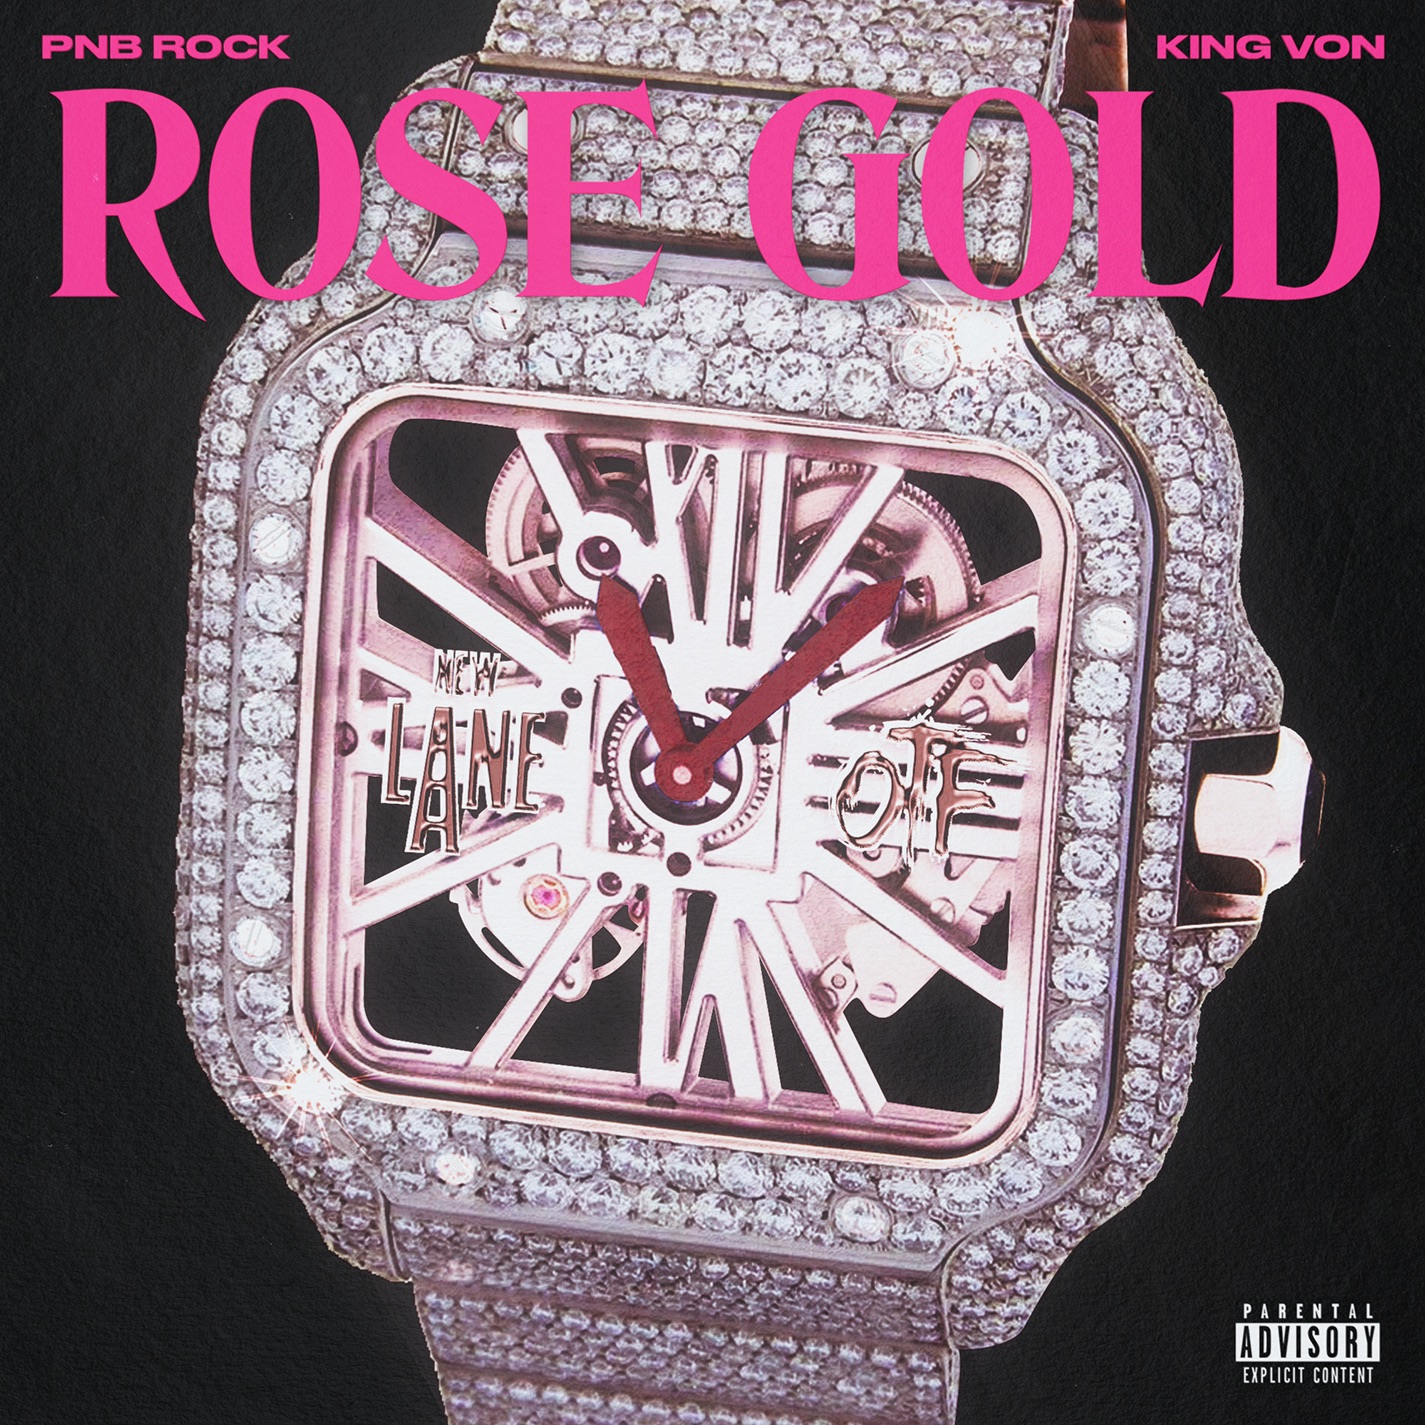 PnB Rock - Rose Gold (feat. King Von) - Single